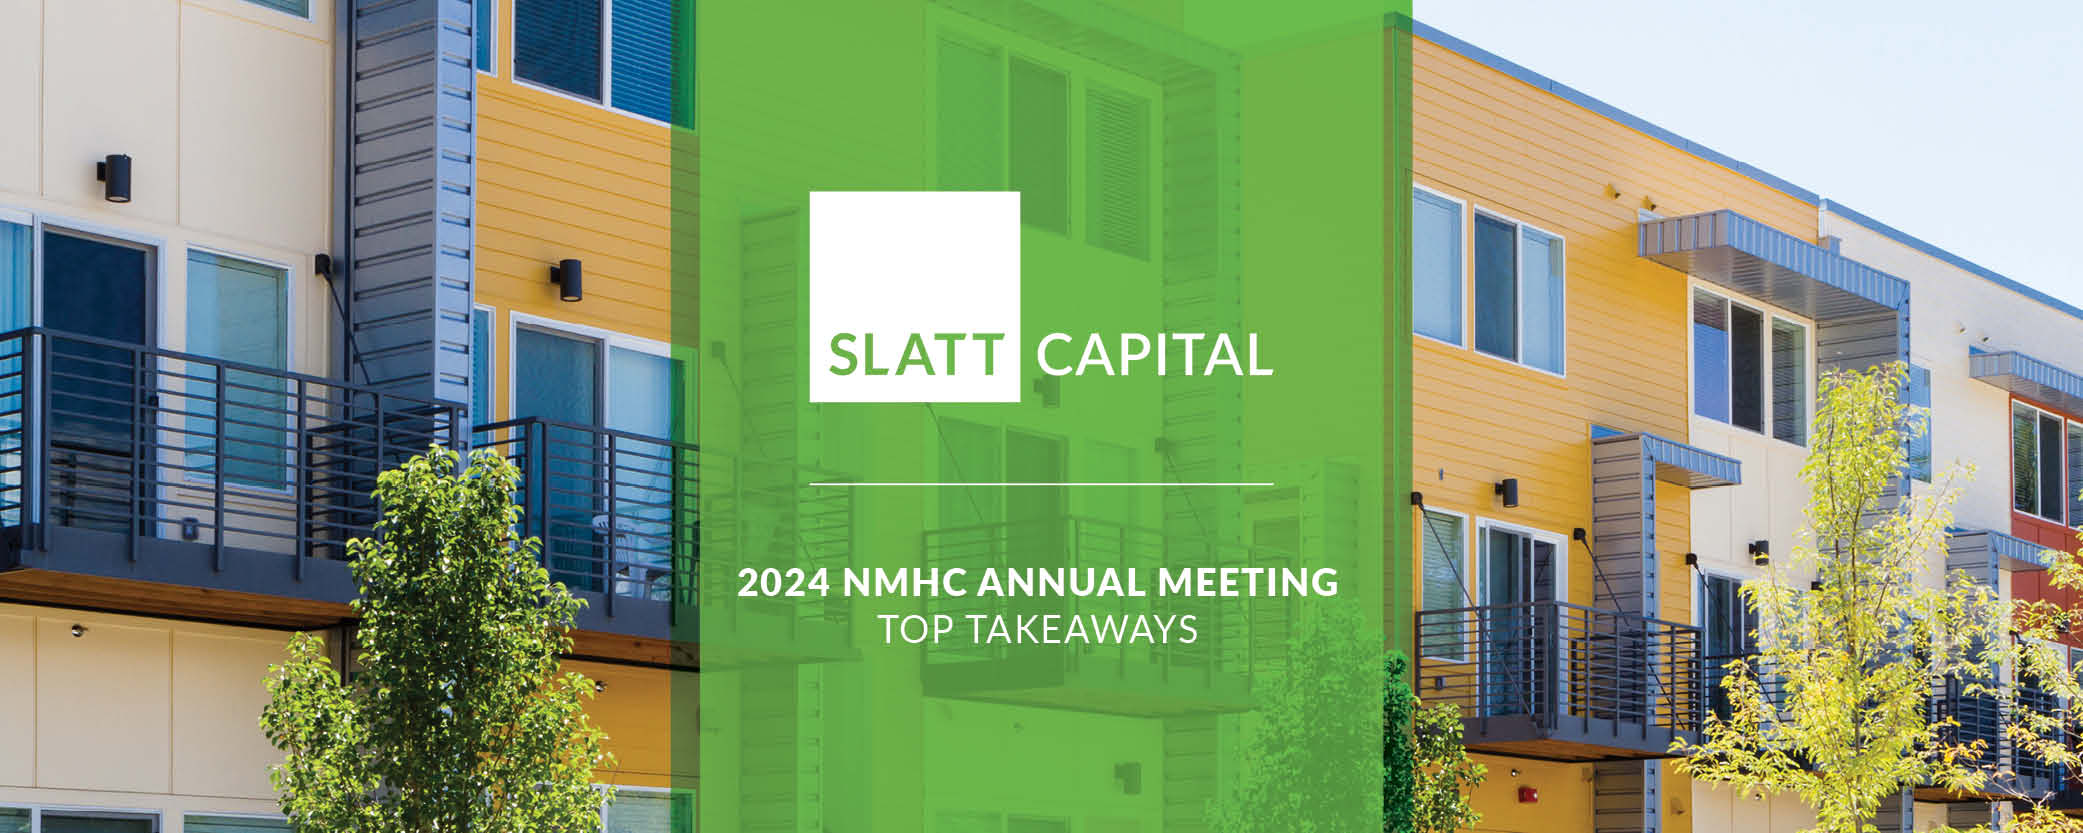 2024 nmhc annual meeting: top takeaways